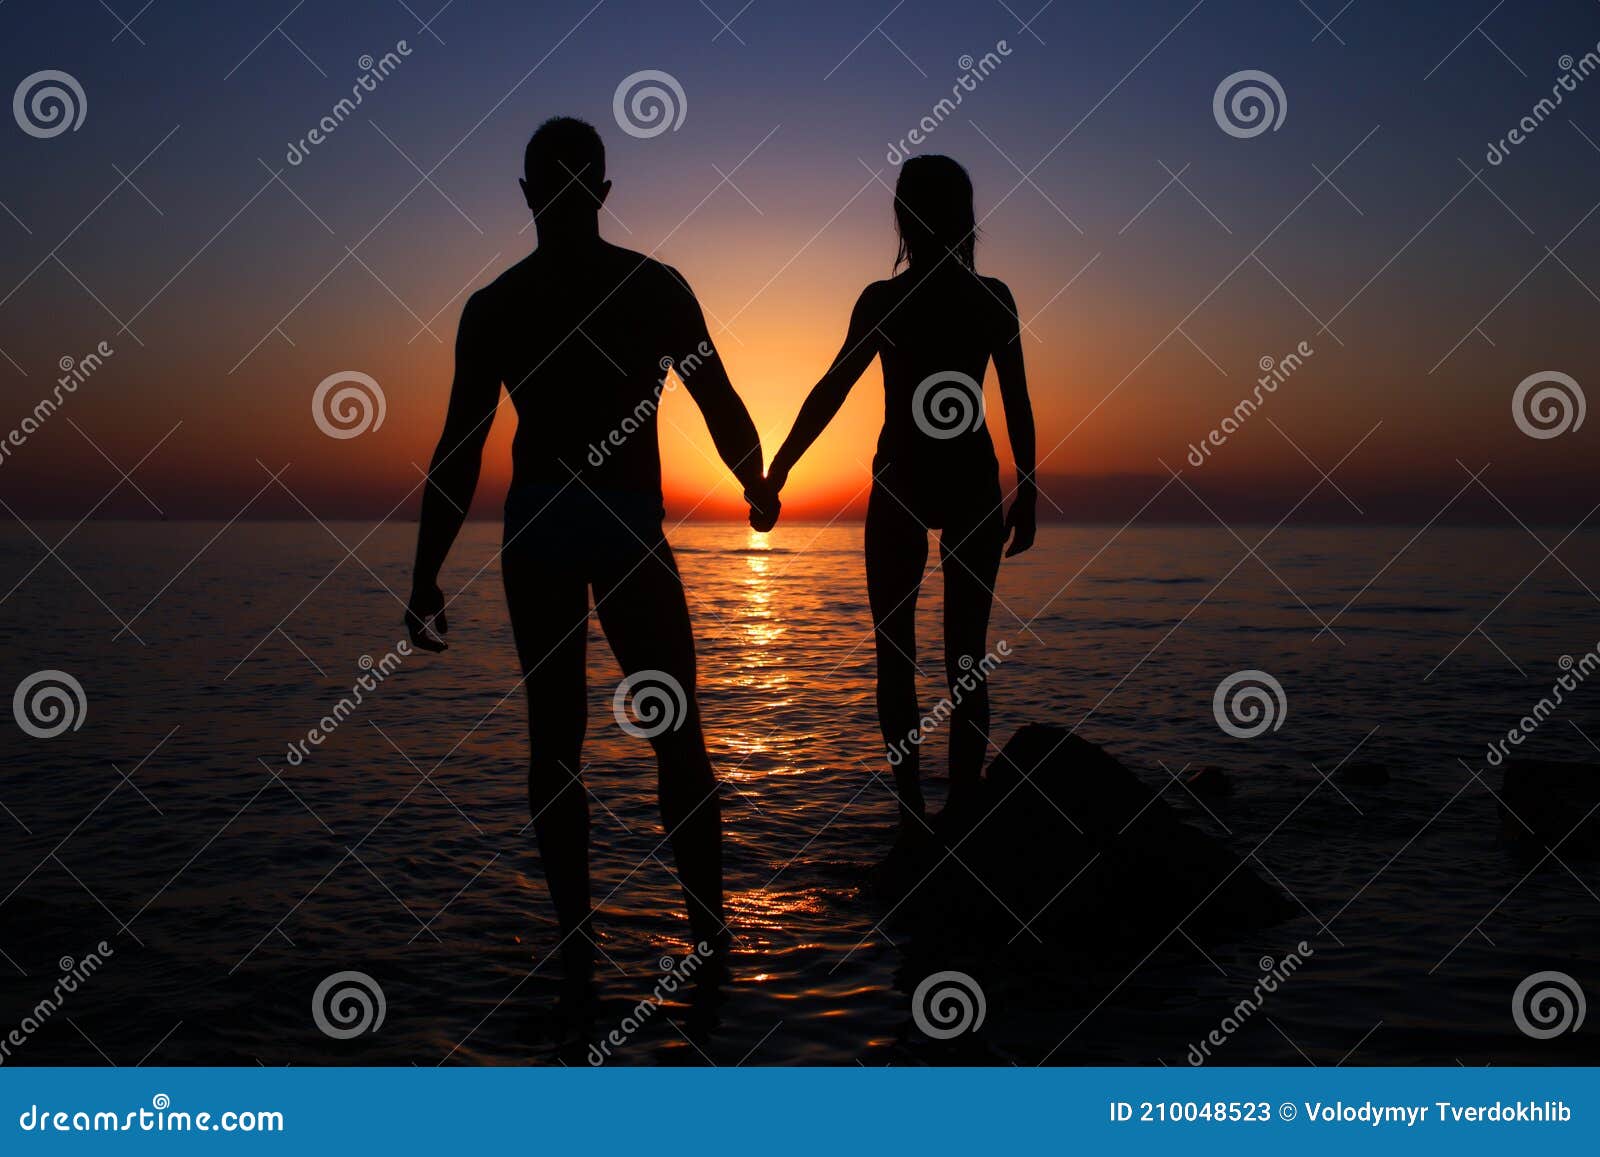 Free Images : man, sea, water, ocean, horizon, silhouette, sunlight, morning, travel, surf ...